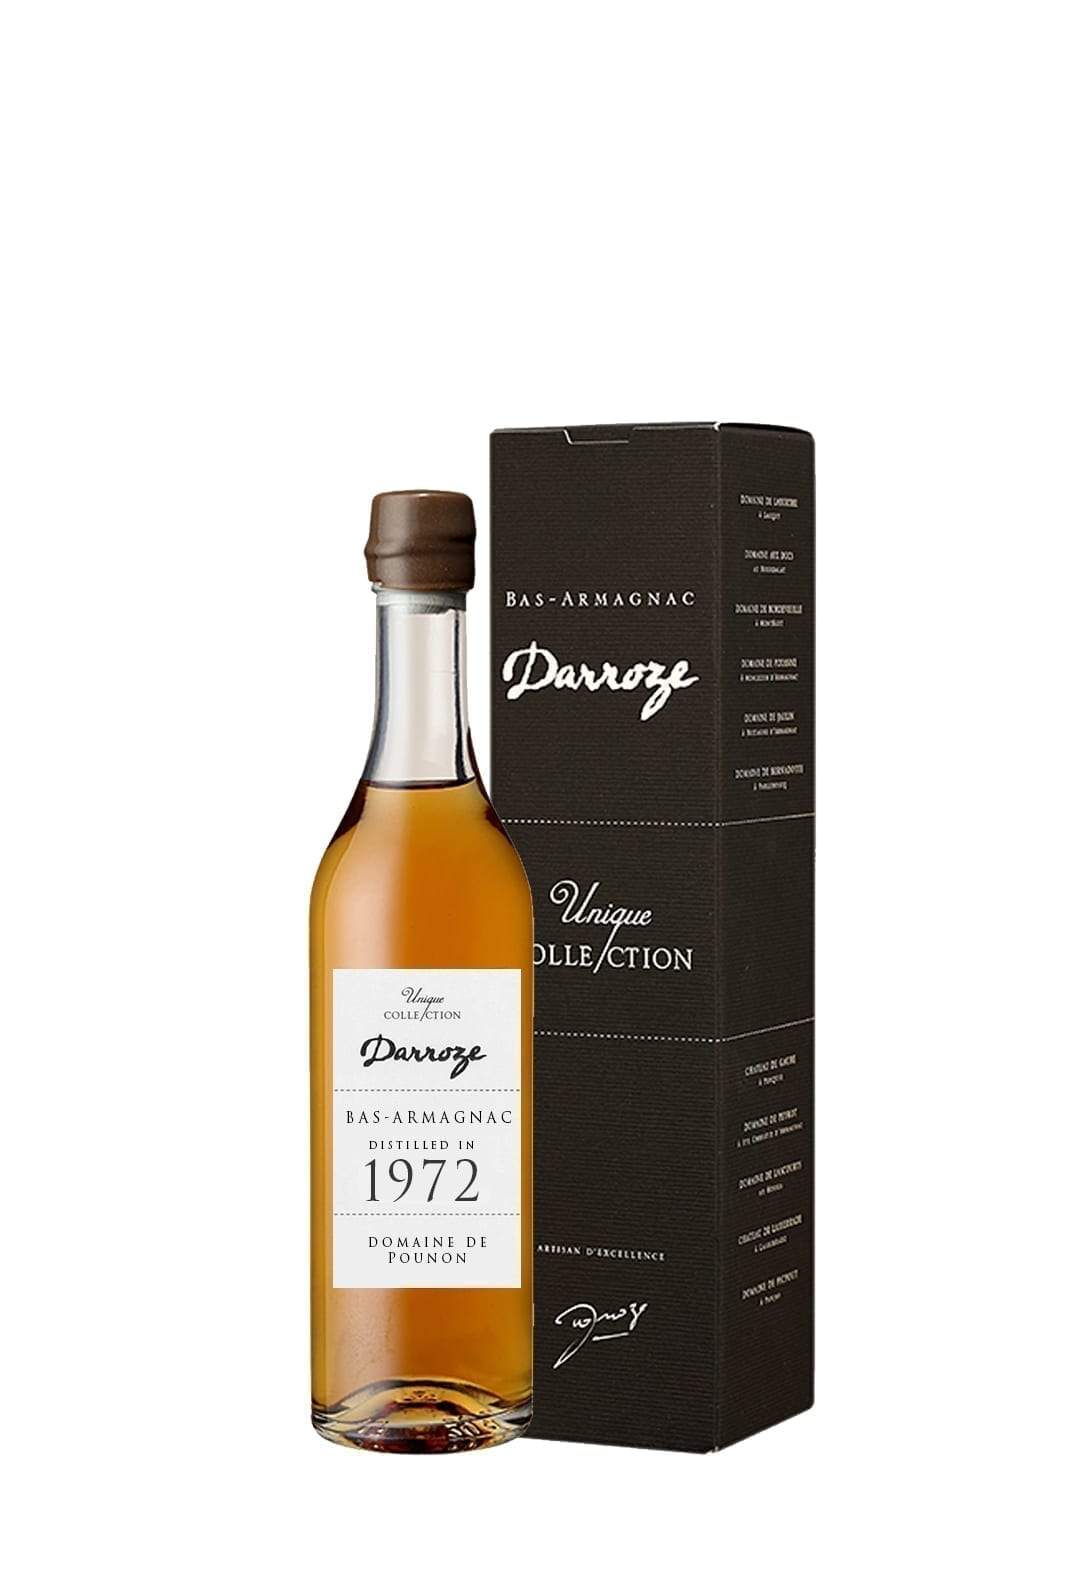 Darroze 1972 Pounon Armagnac 42.2% 200ml | Brandy | Shop online at Spirits of France